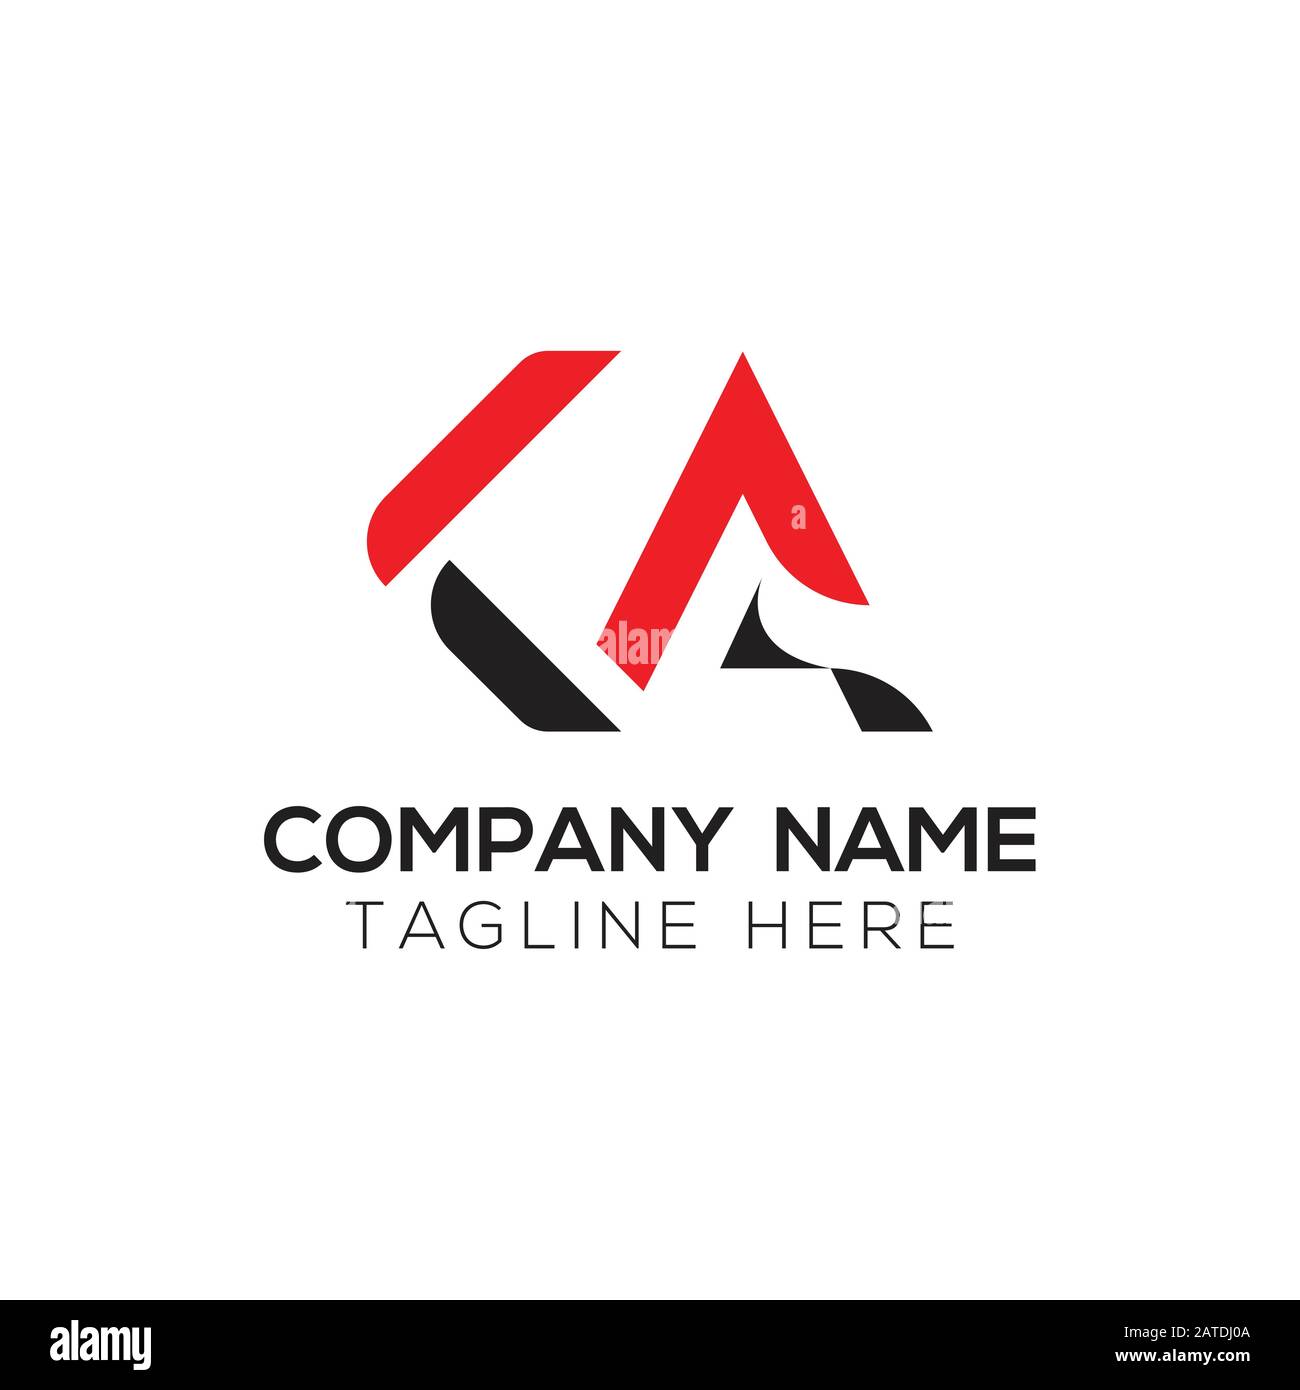 Ka logo hi-res stock photography and images - Alamy